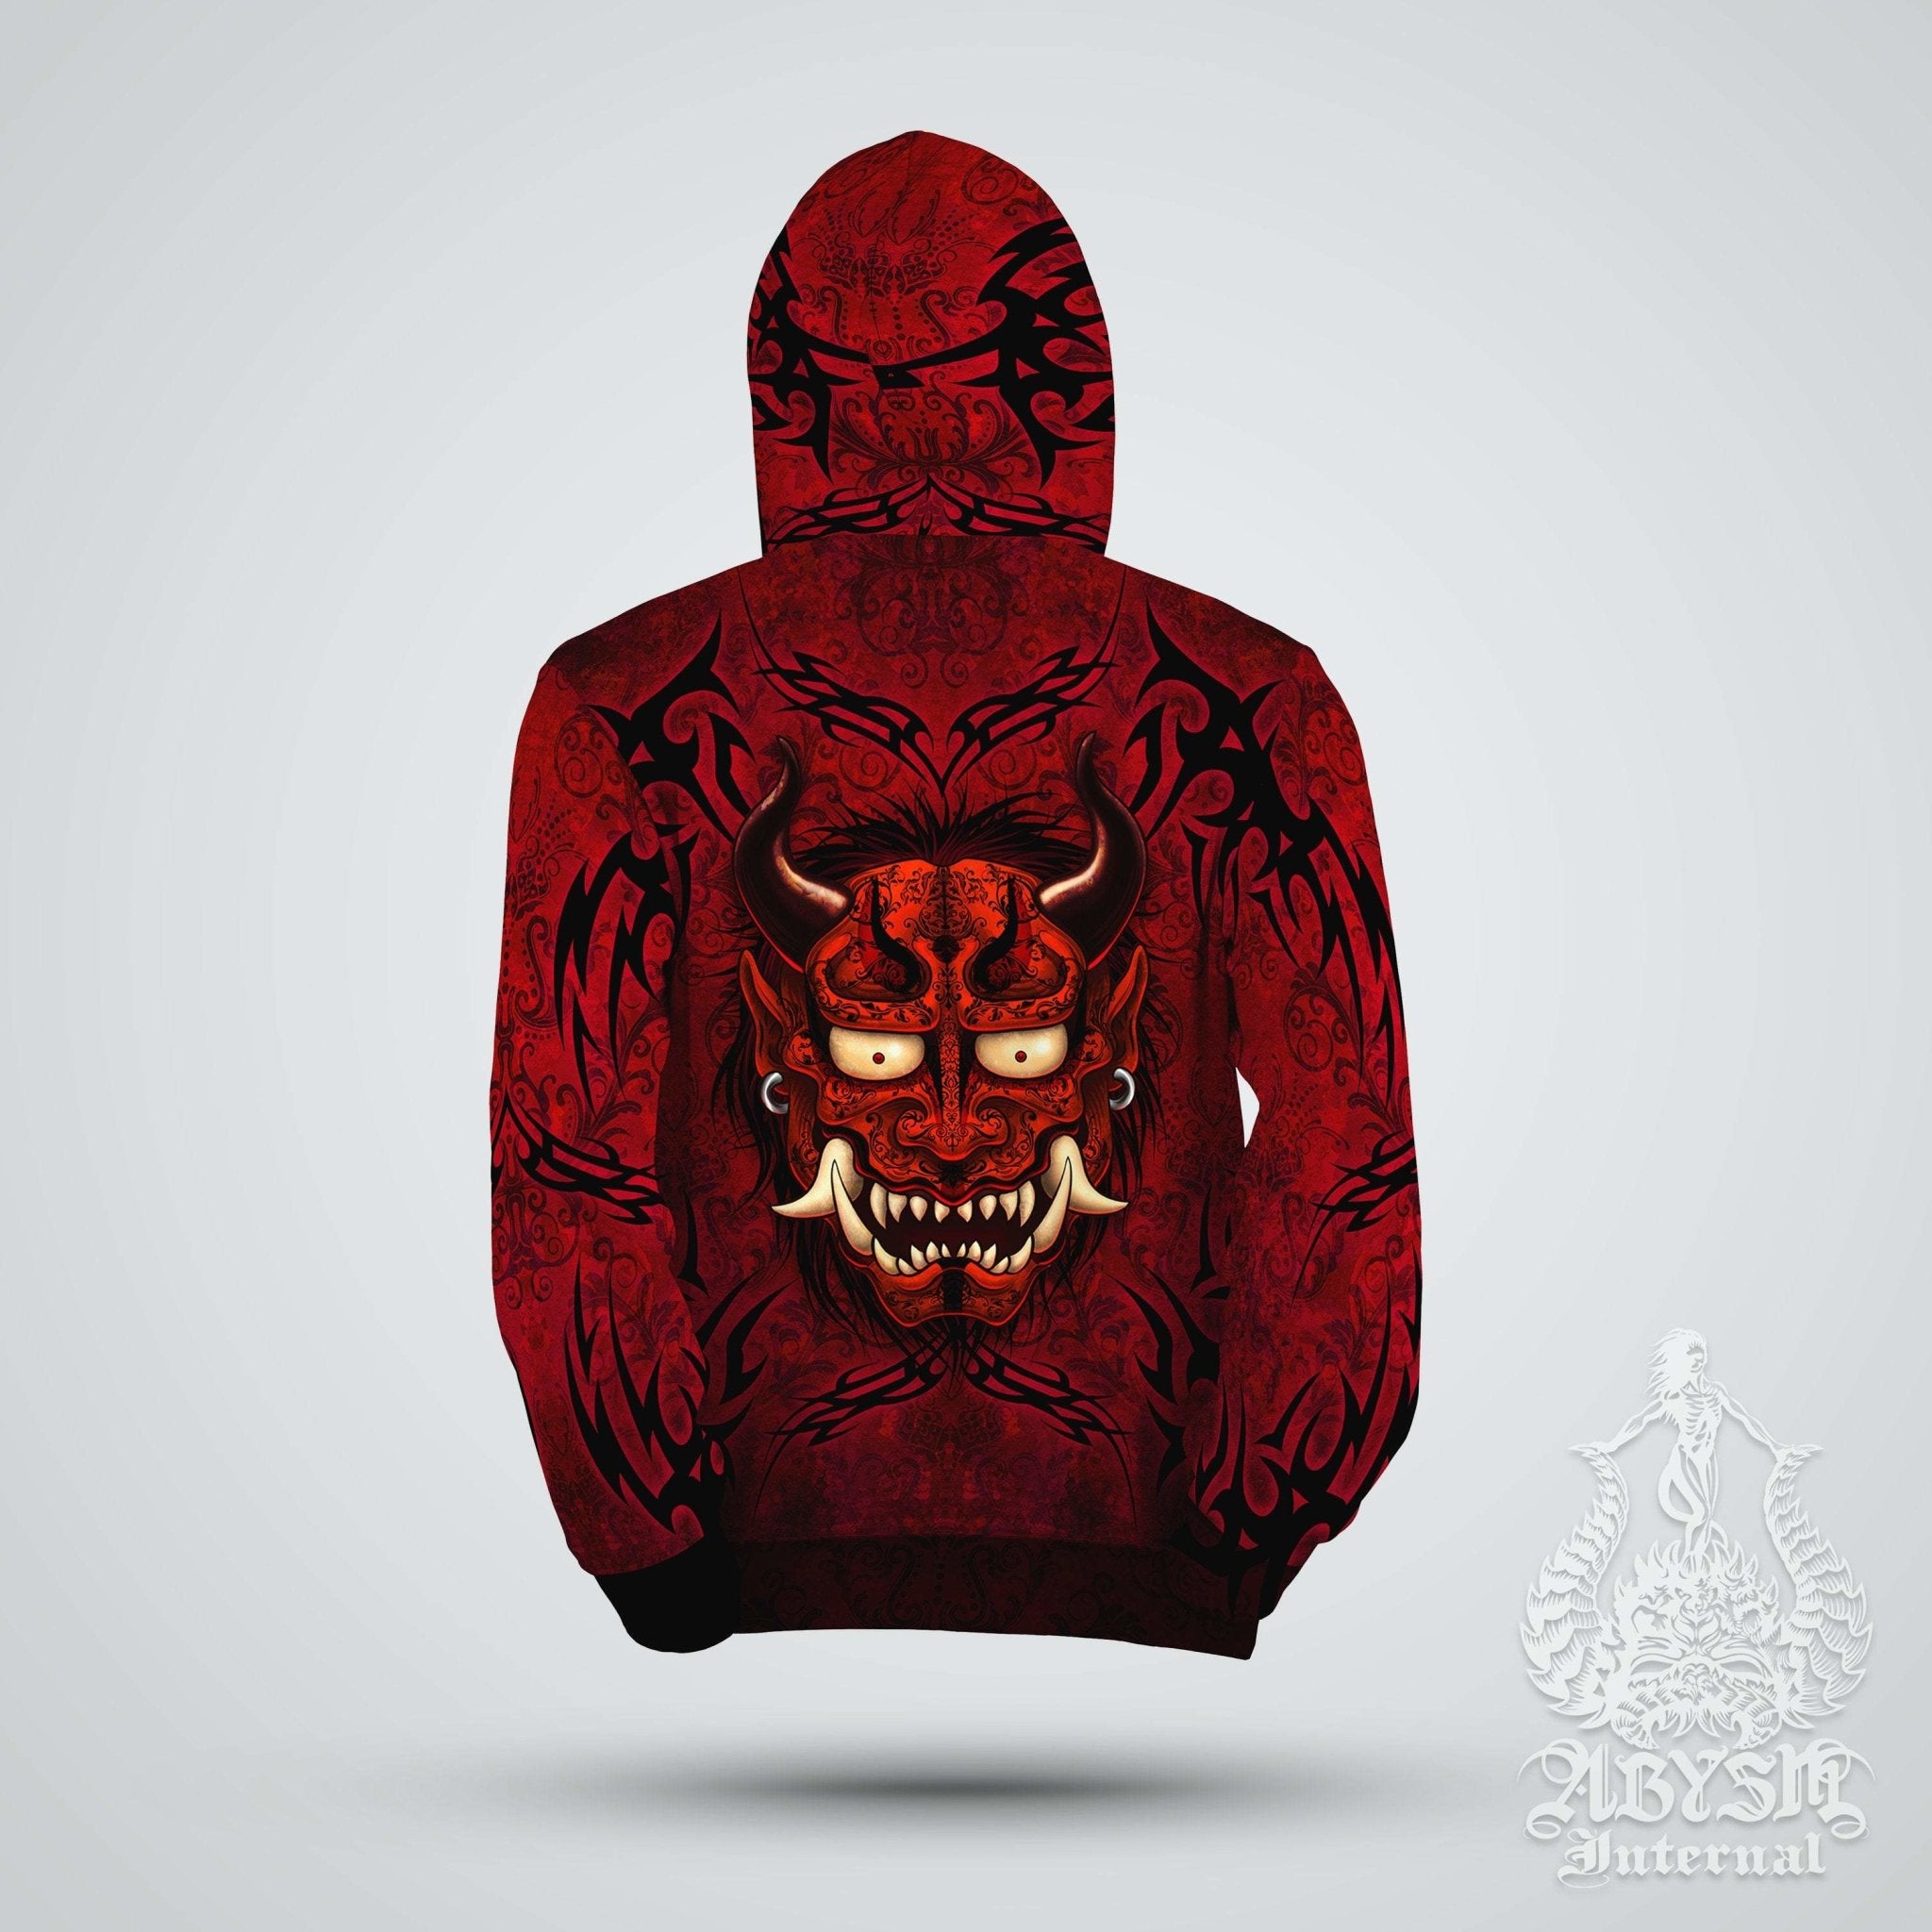 Oni Hoodie, Goth Japanese Streetwear, Goth Street Outfit, Alternative Clothing, Unisex - Red Demon, Black Tattoo - Abysm Internal